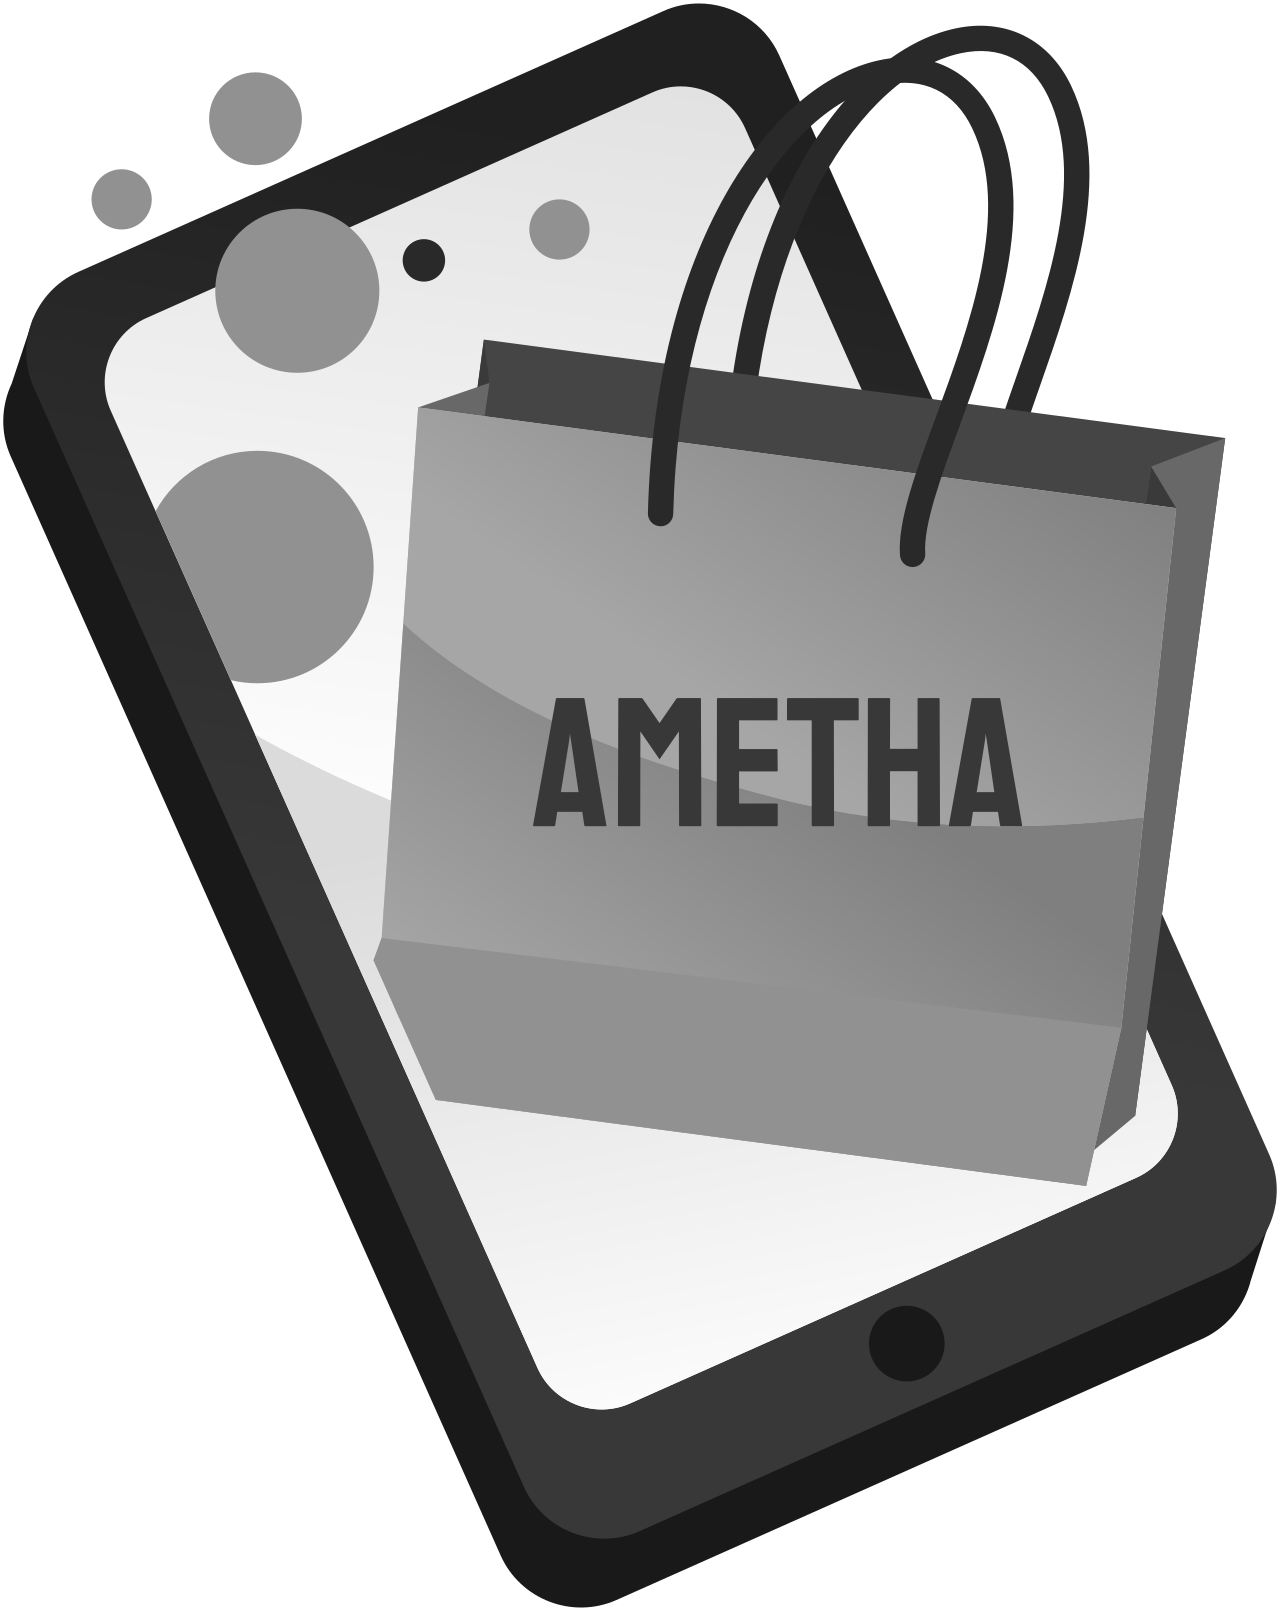 ametha's logo